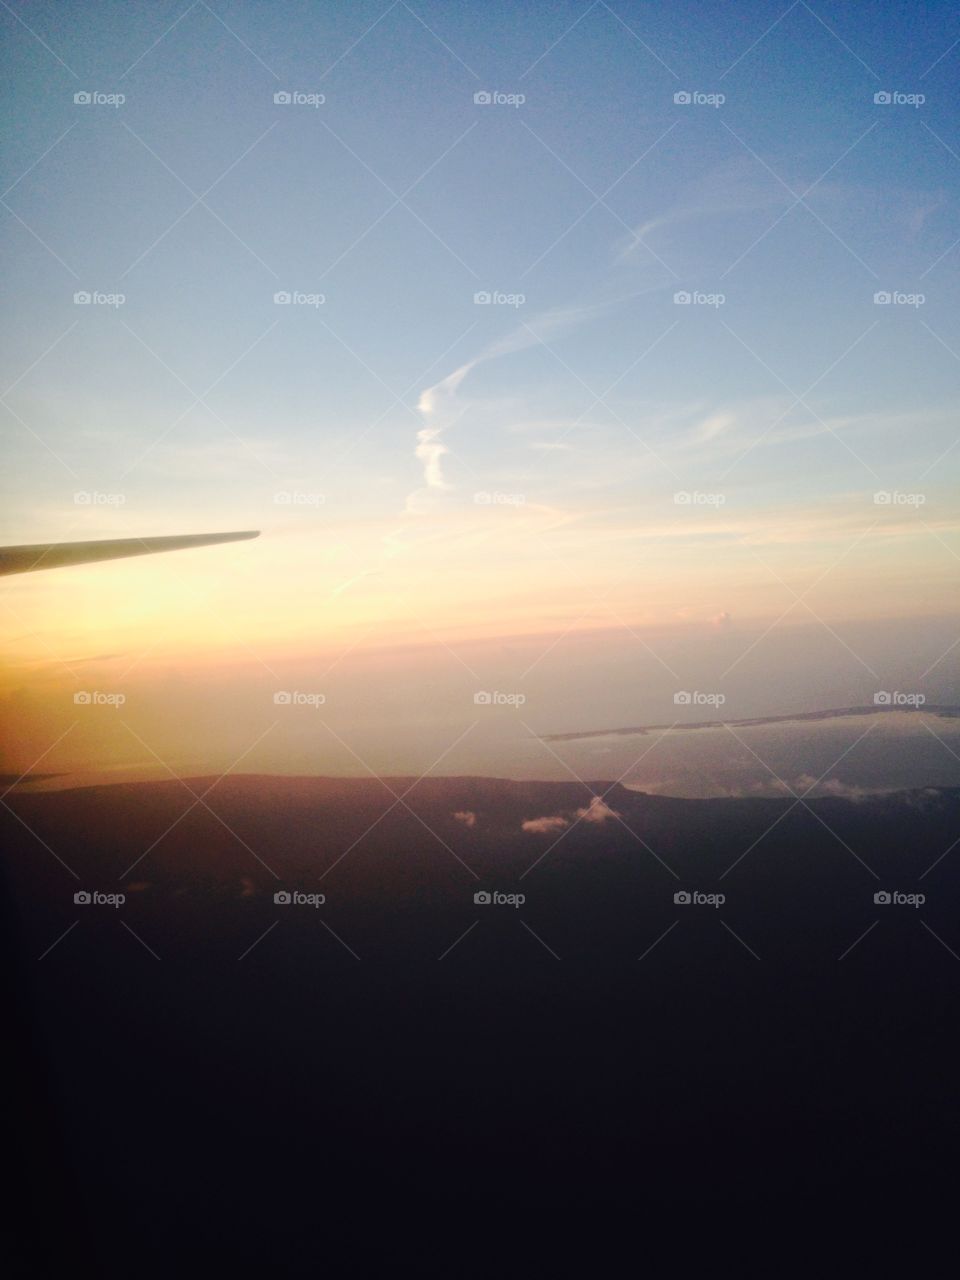 Airplane sunset 